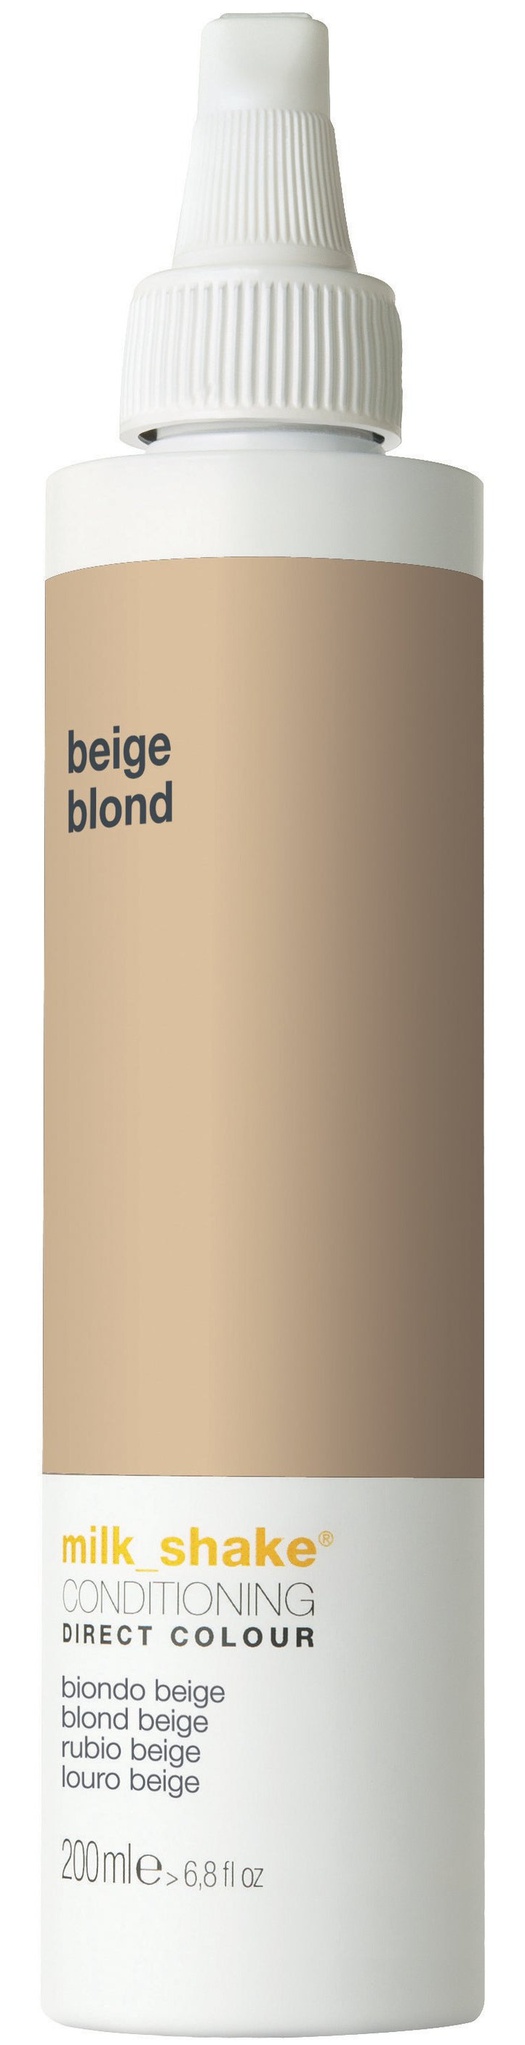 Milk shake Conditioning Direct Colour Beige Blonde